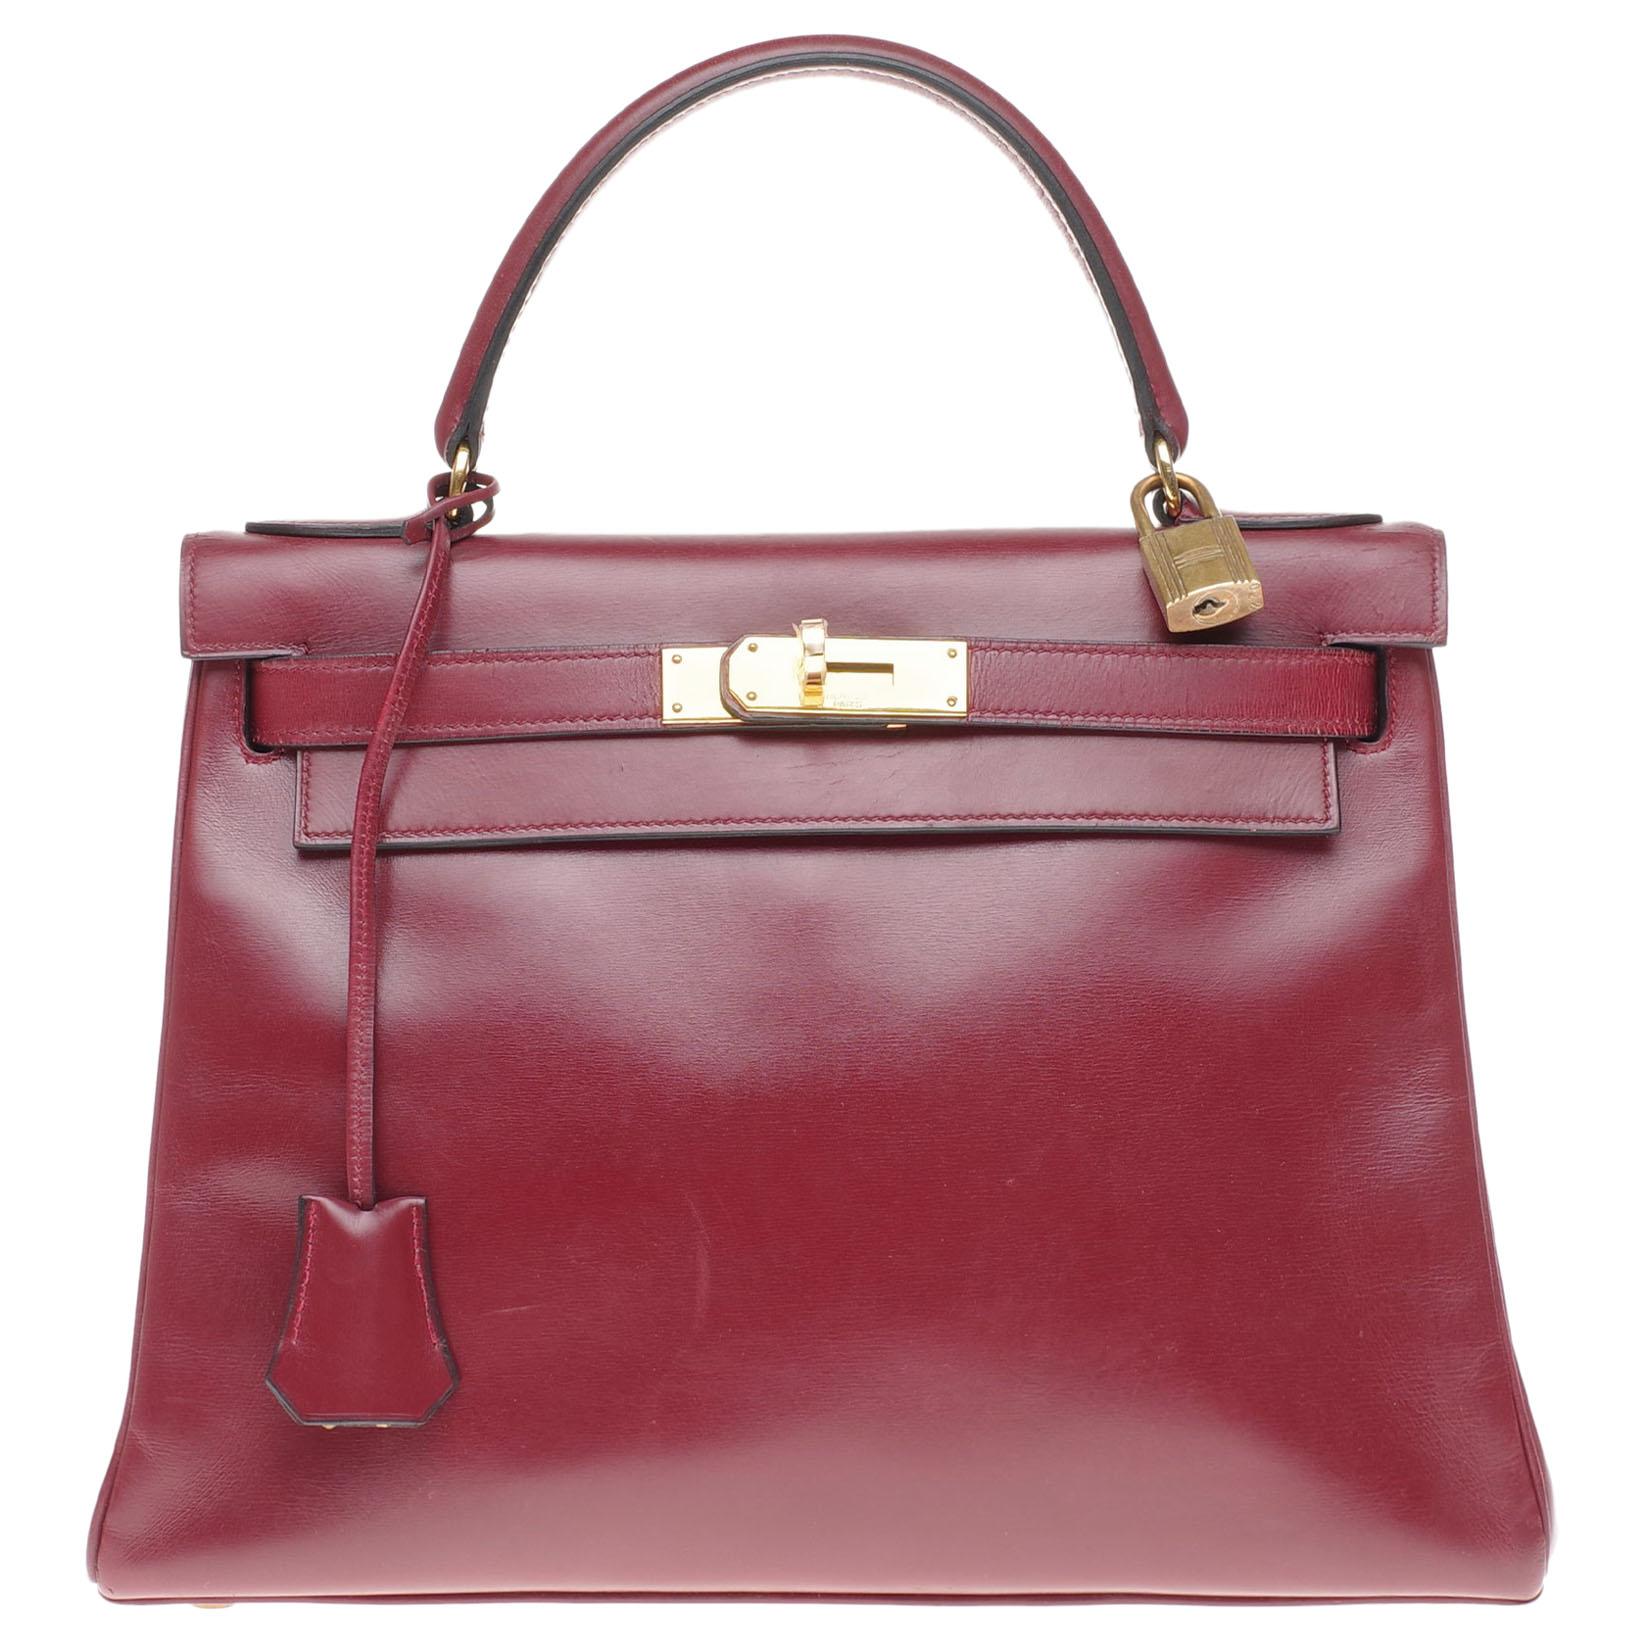 Hermès Kelly 28cm retourné handbag in burgundy calfskin Gold hardware